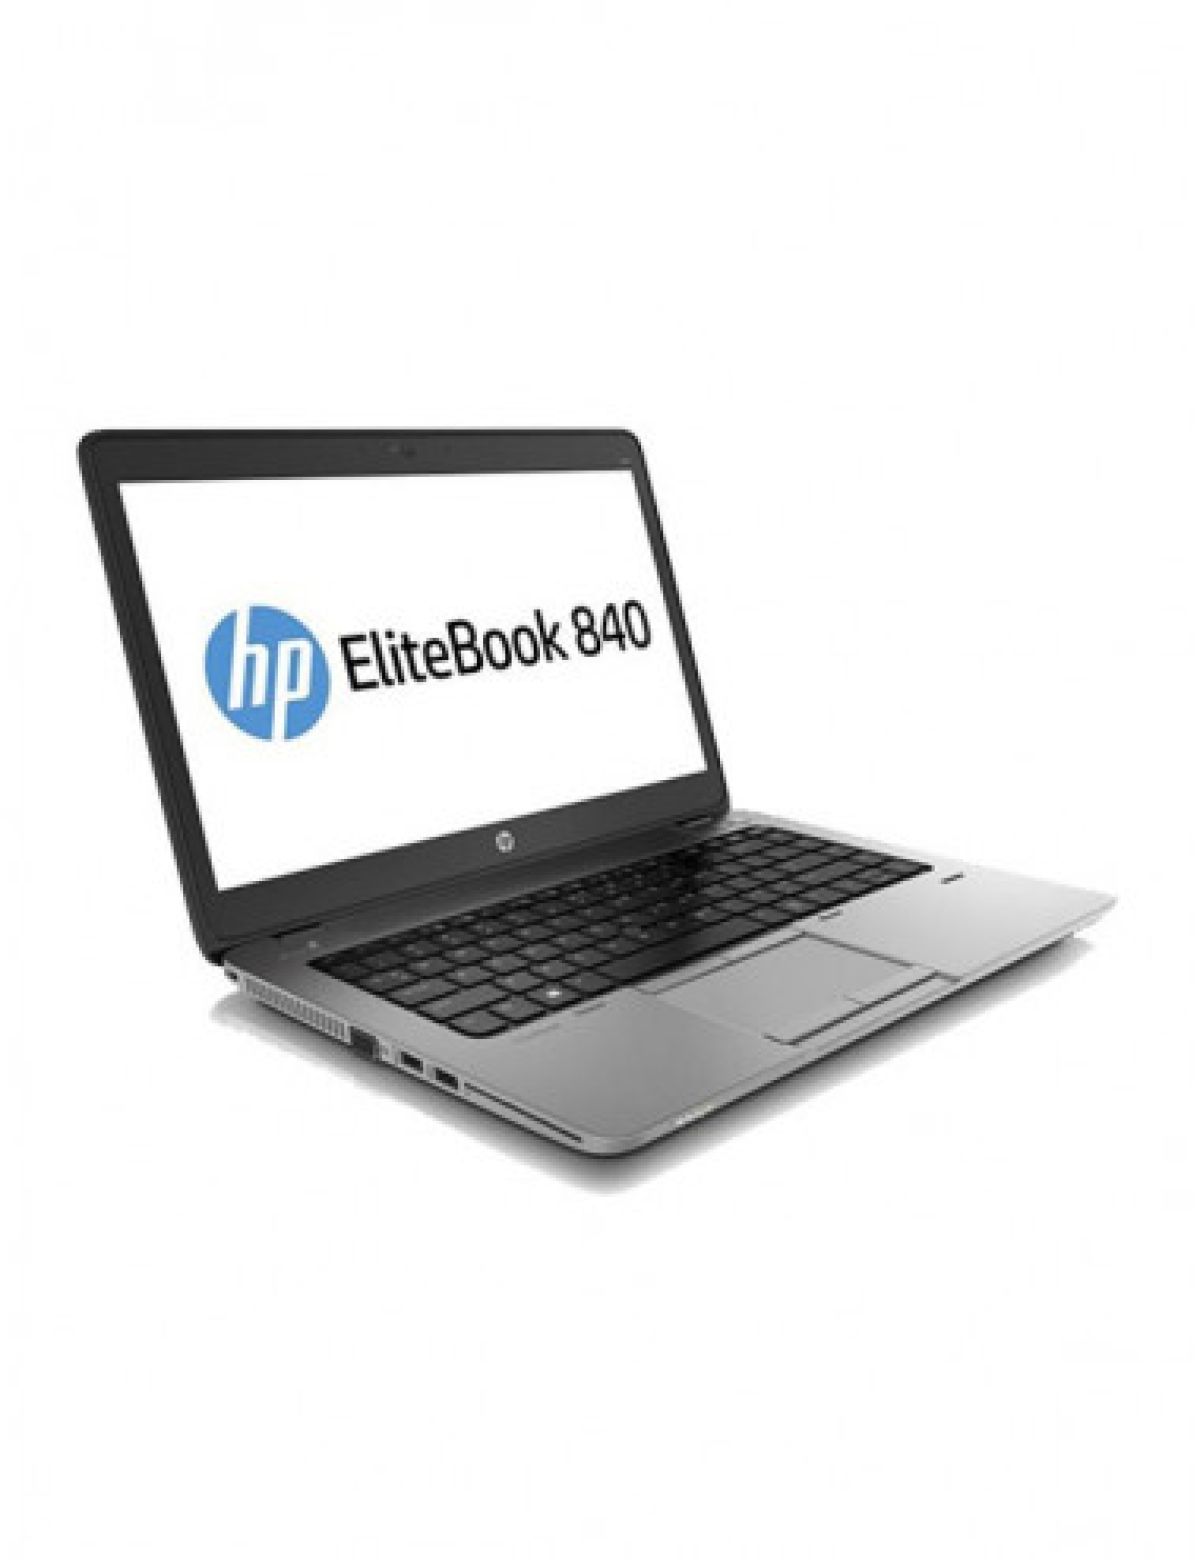 HP EliteBook 840 G1 Intel Core i7-4600 2.10Ghz 8 Go SSD 256 Go